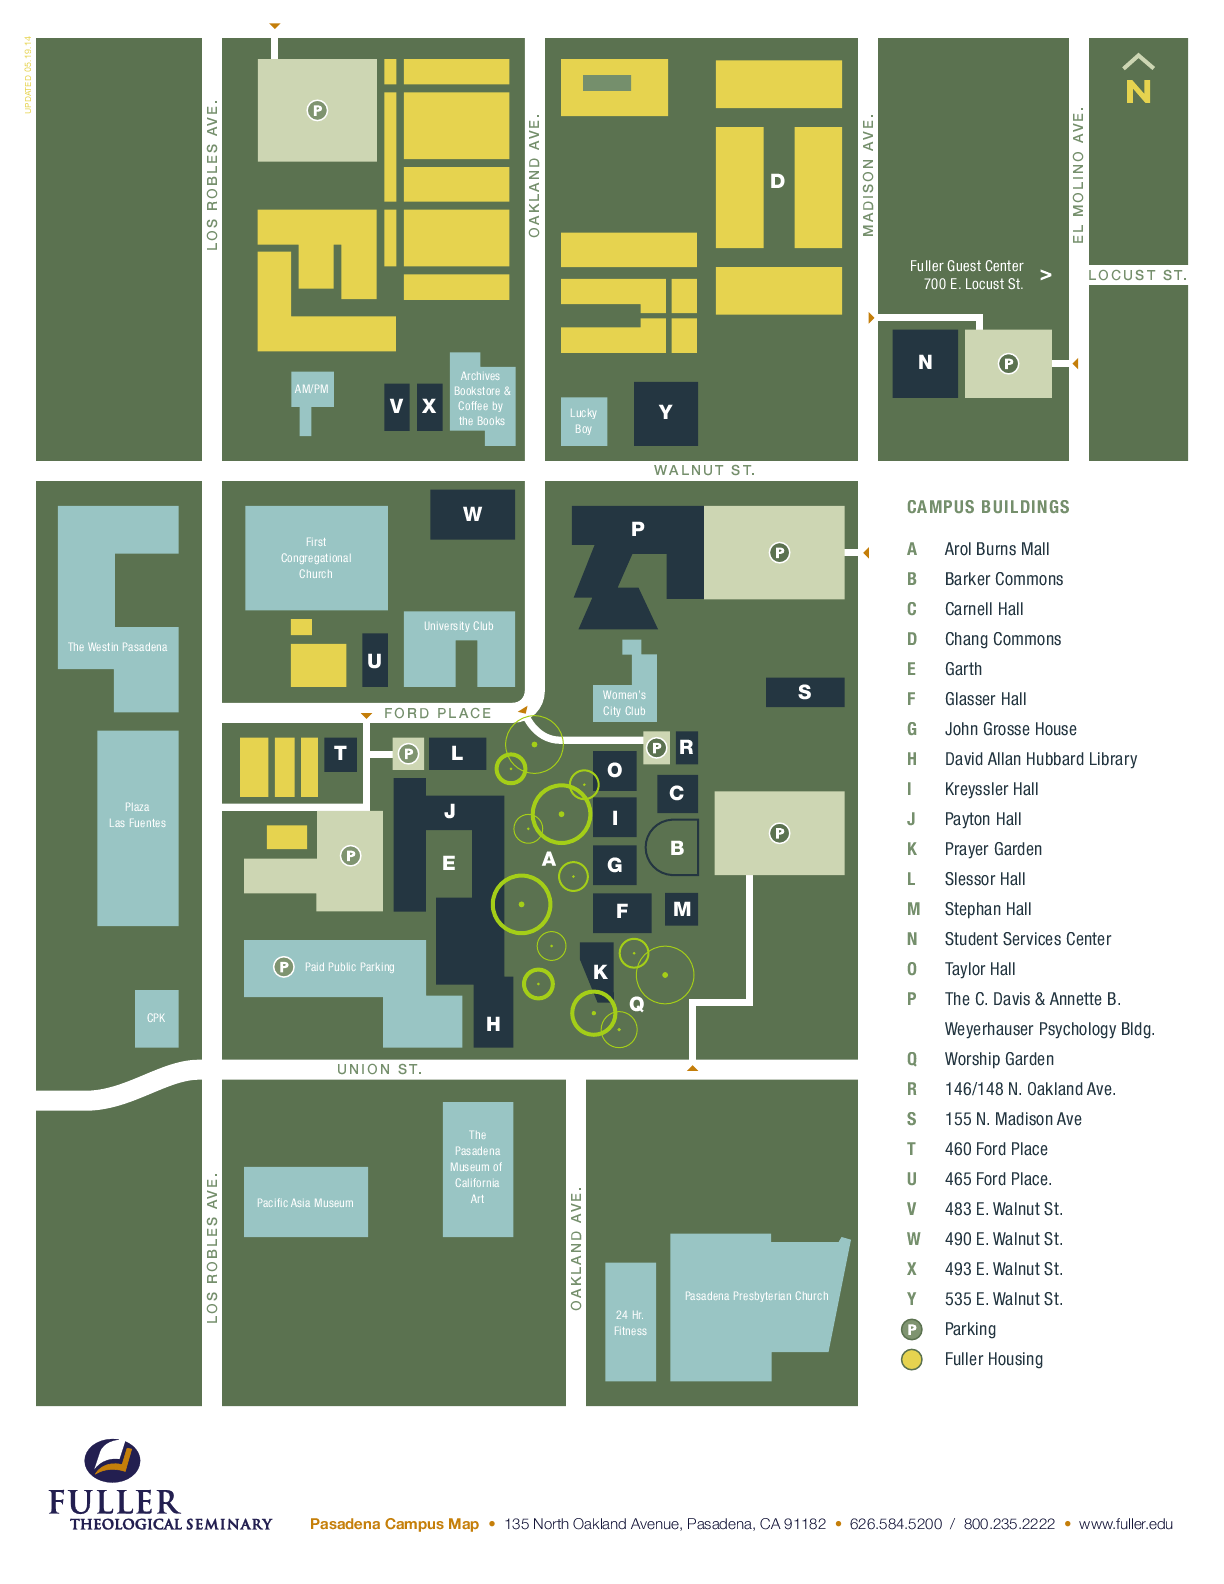 fuller-life_map_campus-Fuller.png